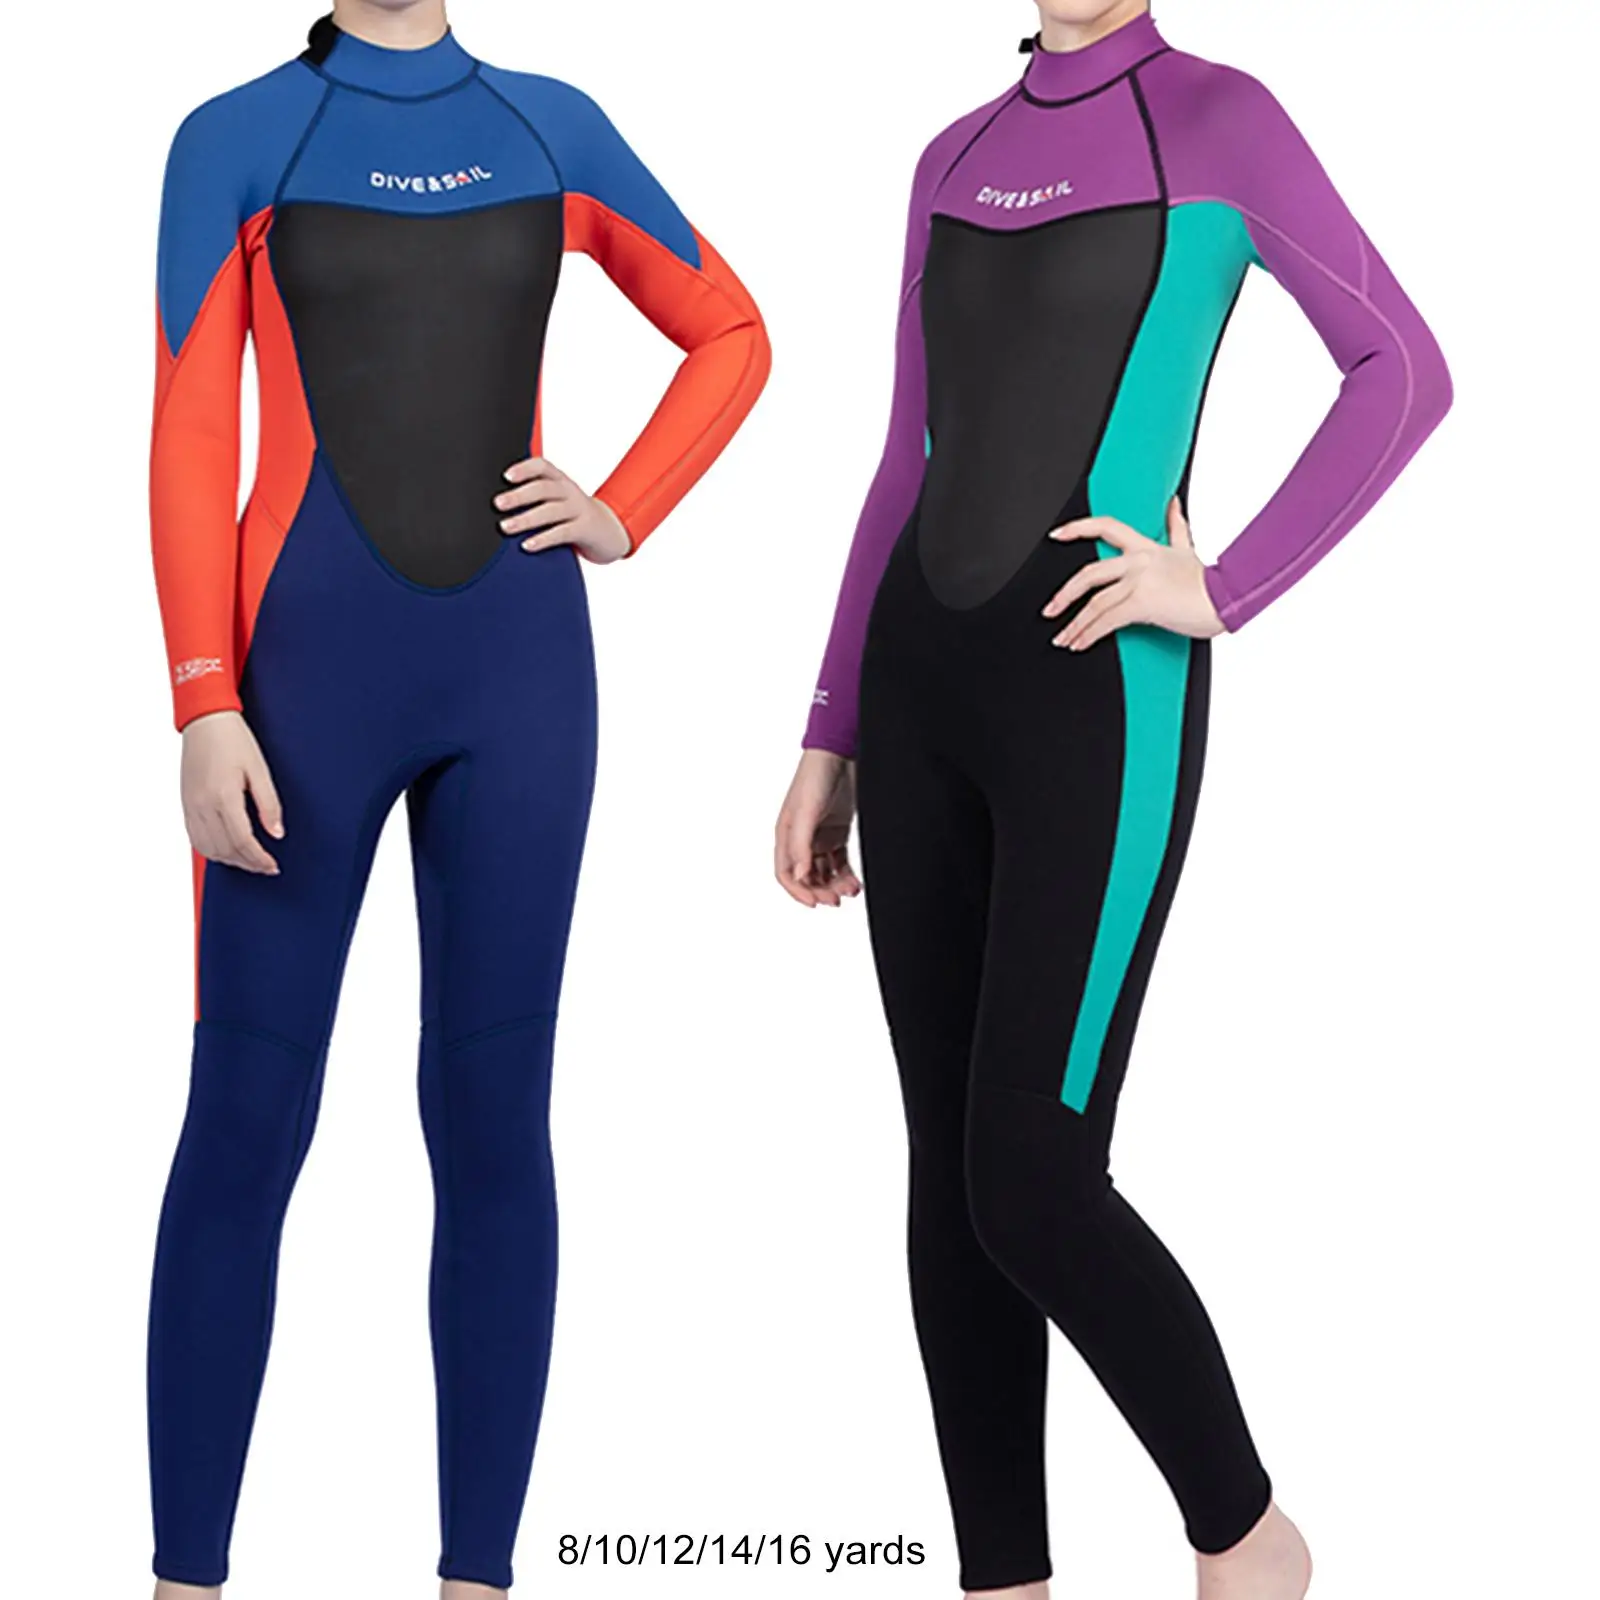 

Wetsuit 2.5mm Neoprene Thermal Fullsuit for Kayaking Water Sports Snorkeling